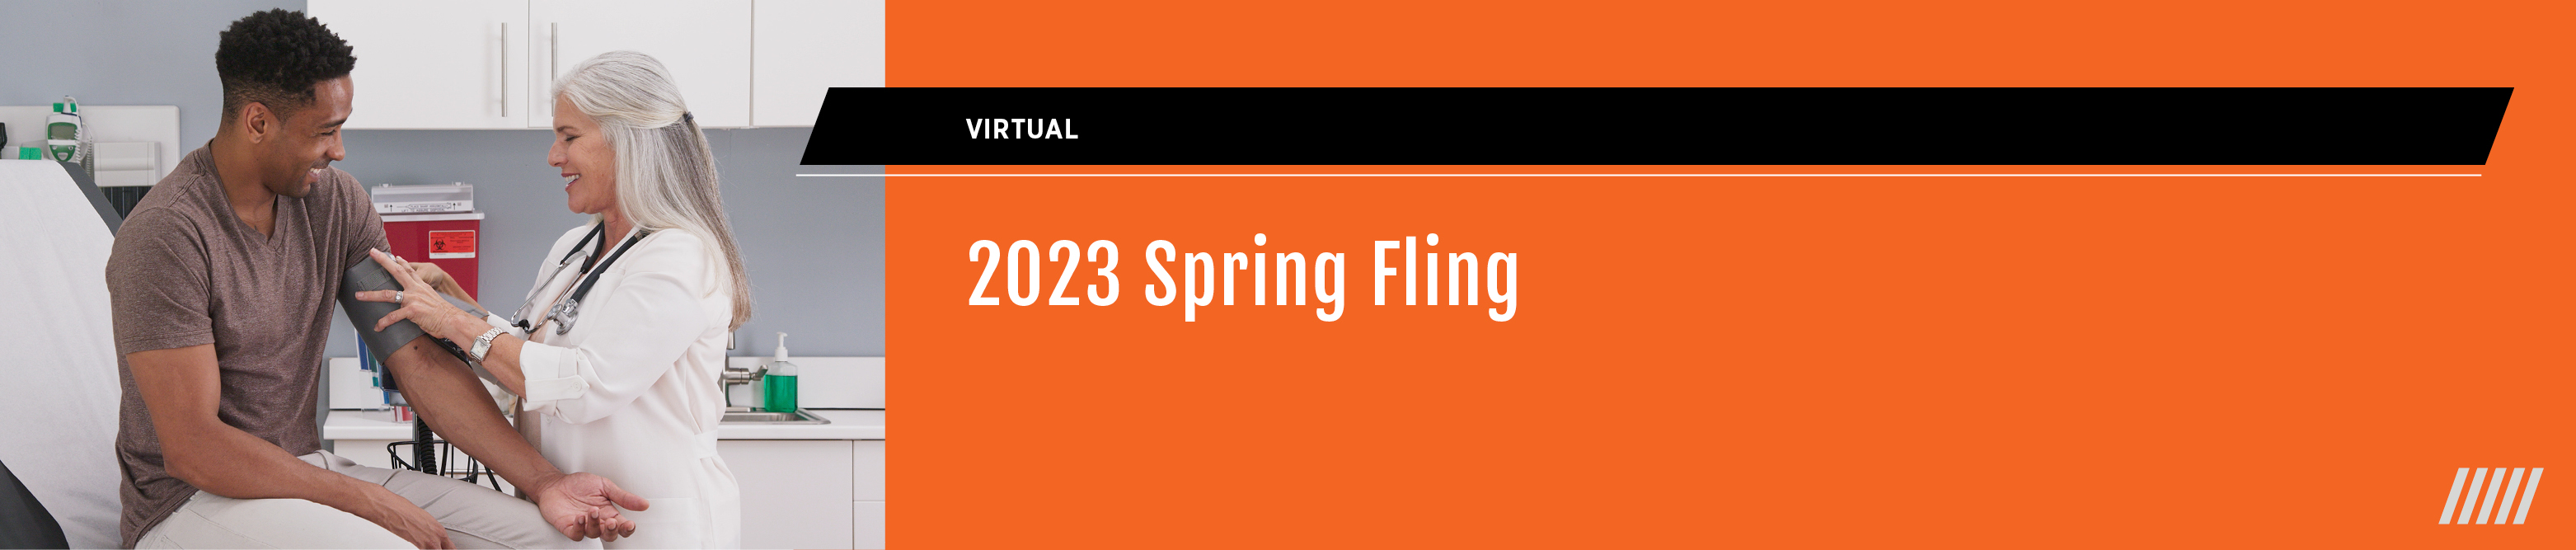 2023 Livestream Spring Fling CME Banner